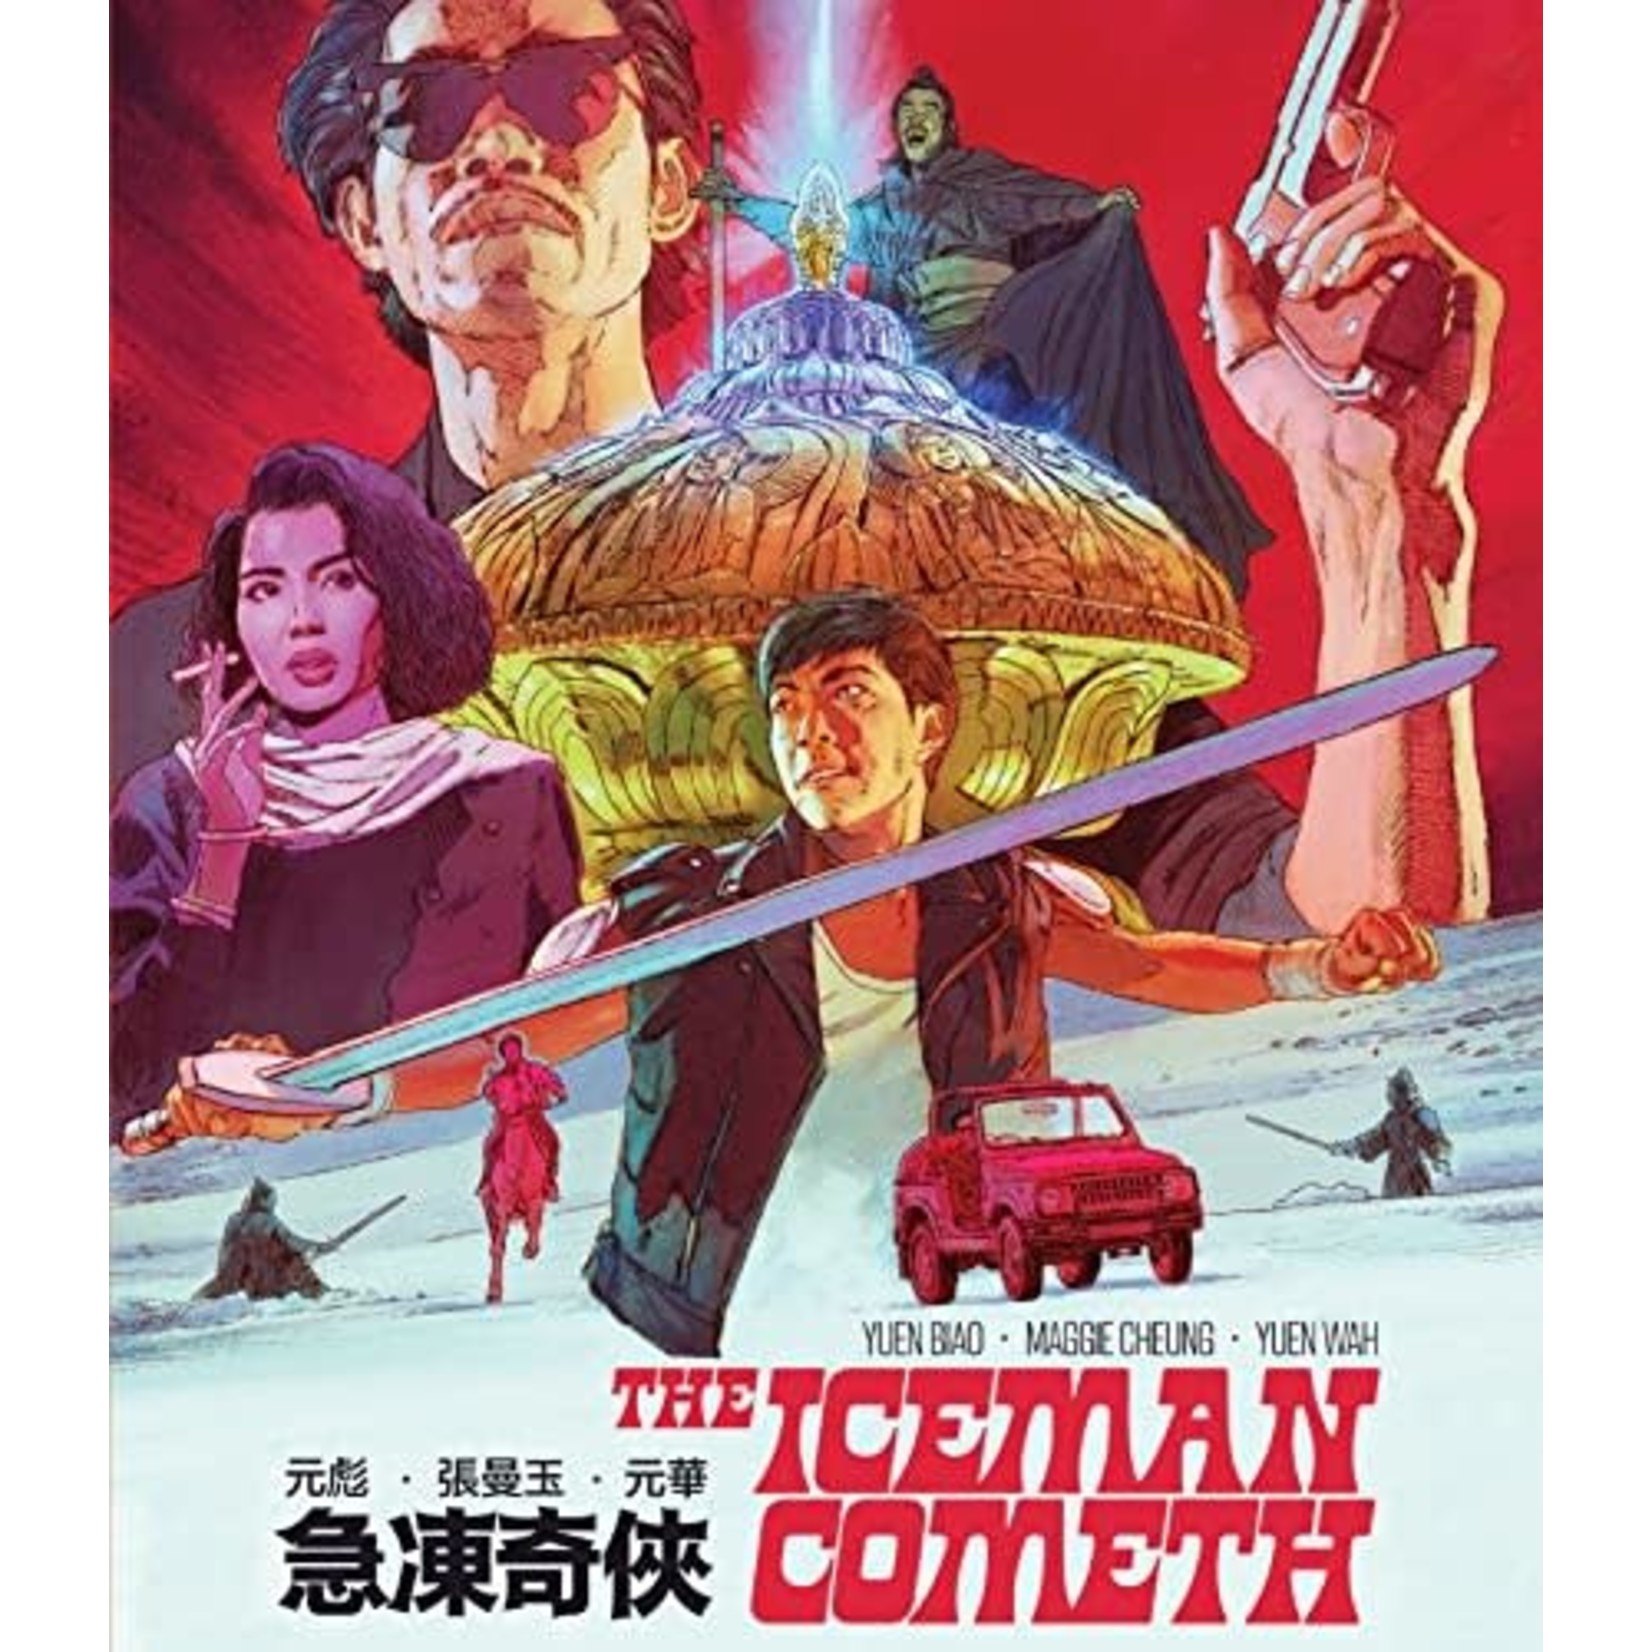 Iceman Cometh (1989) [BRD]